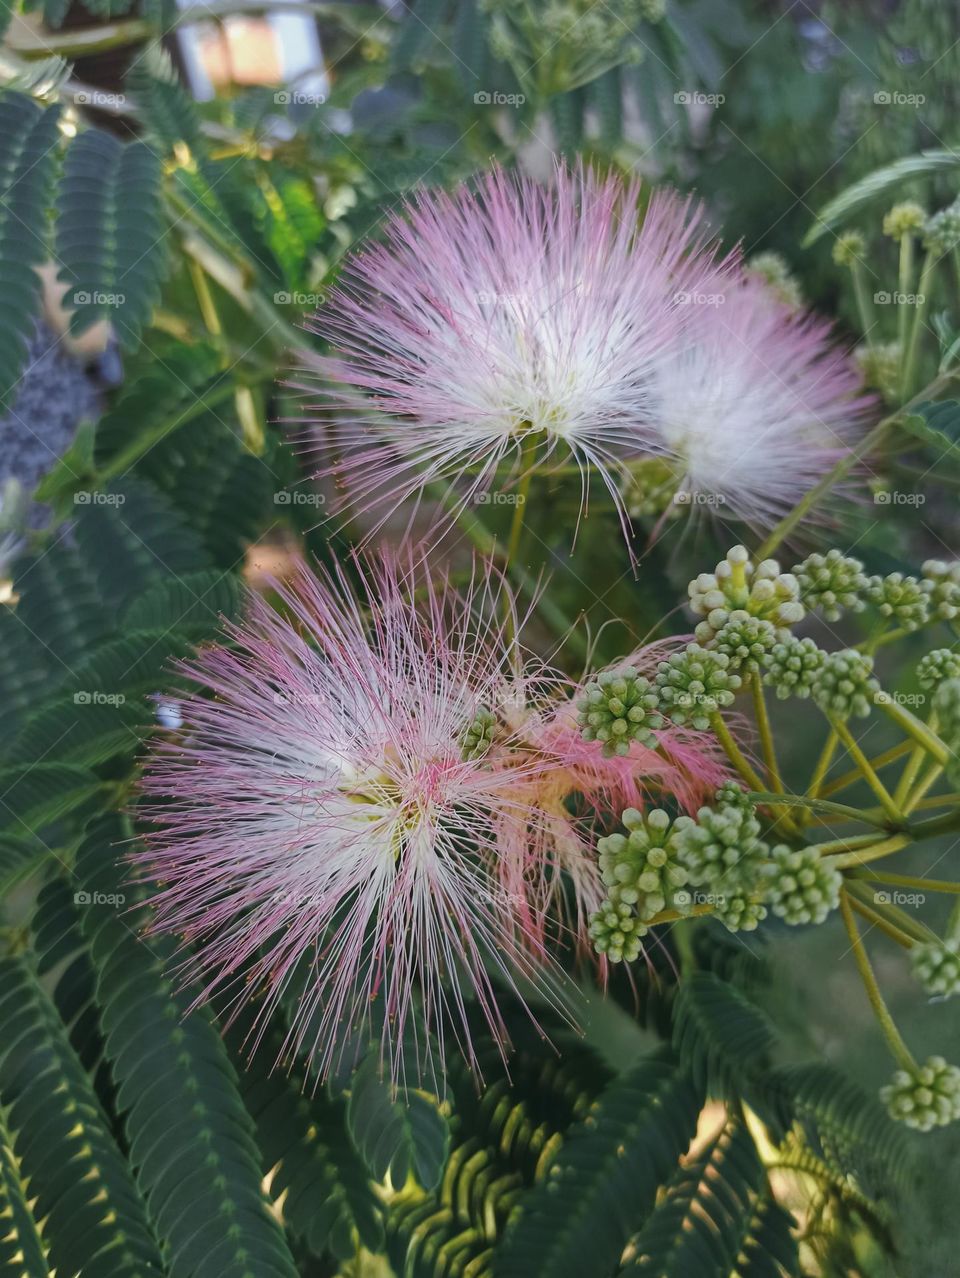 Mimosa Persian silk tree